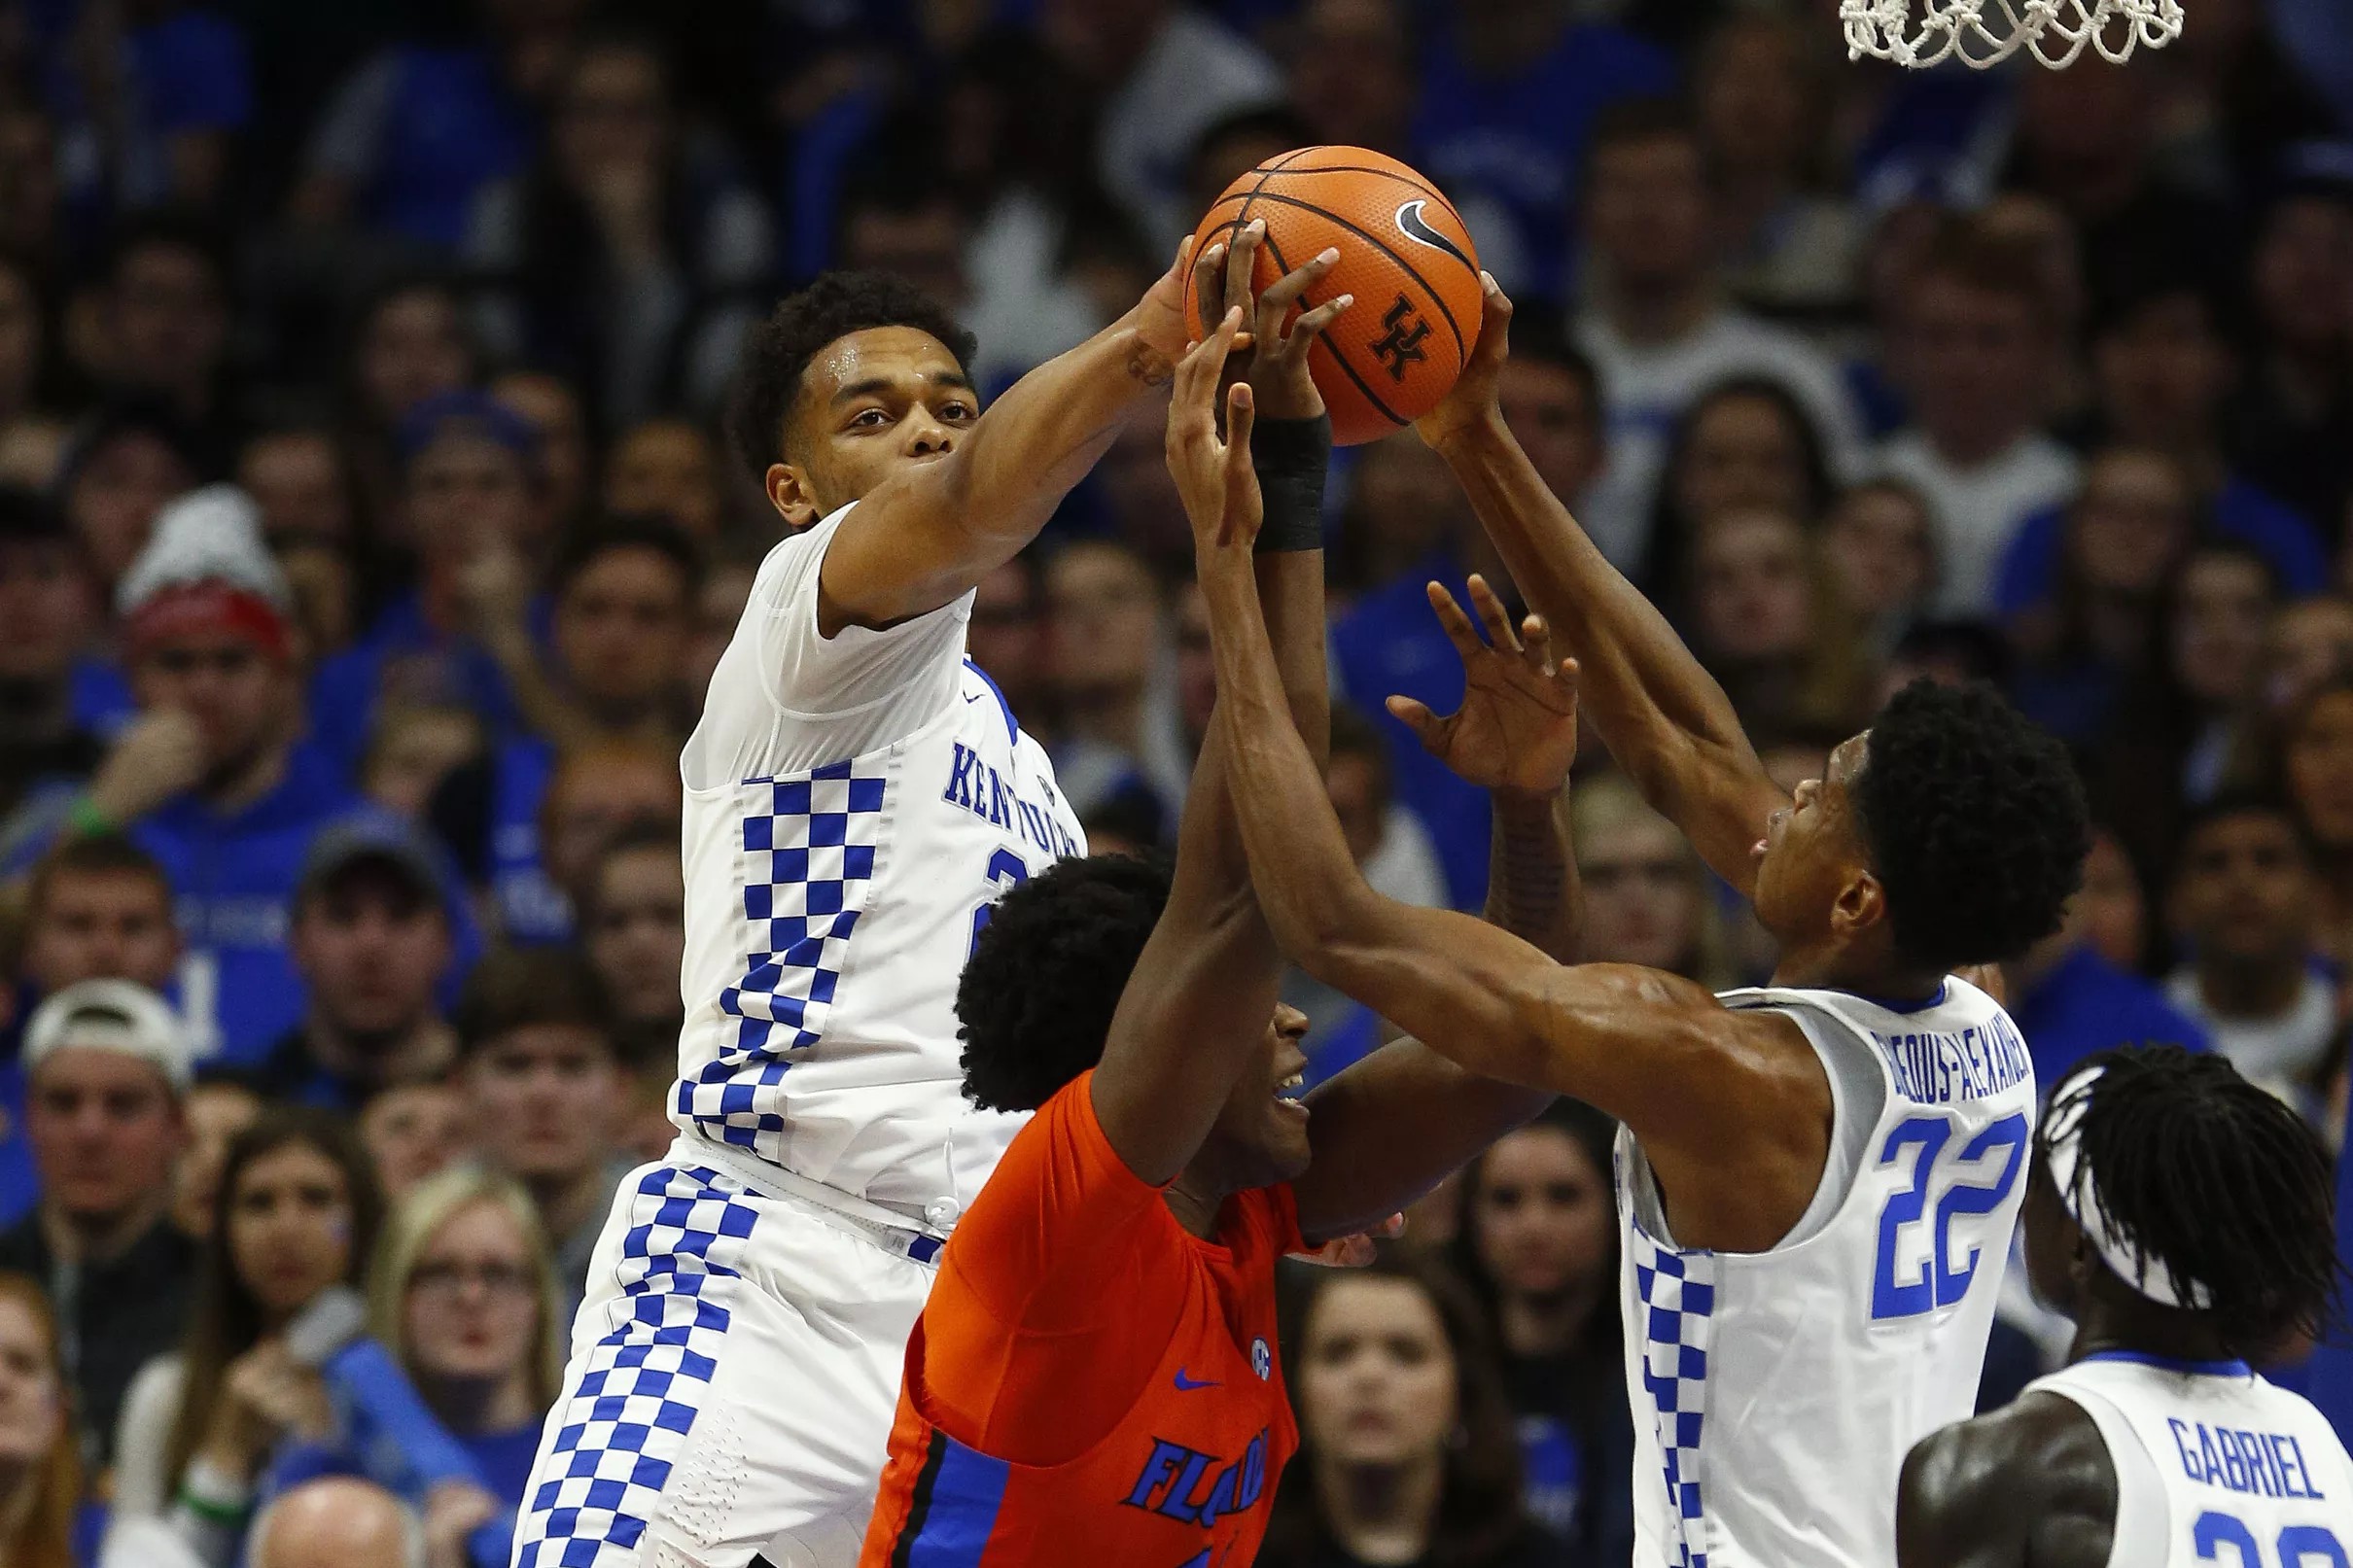 Kentucky Basketball projected to be underdog vs Florida Gators